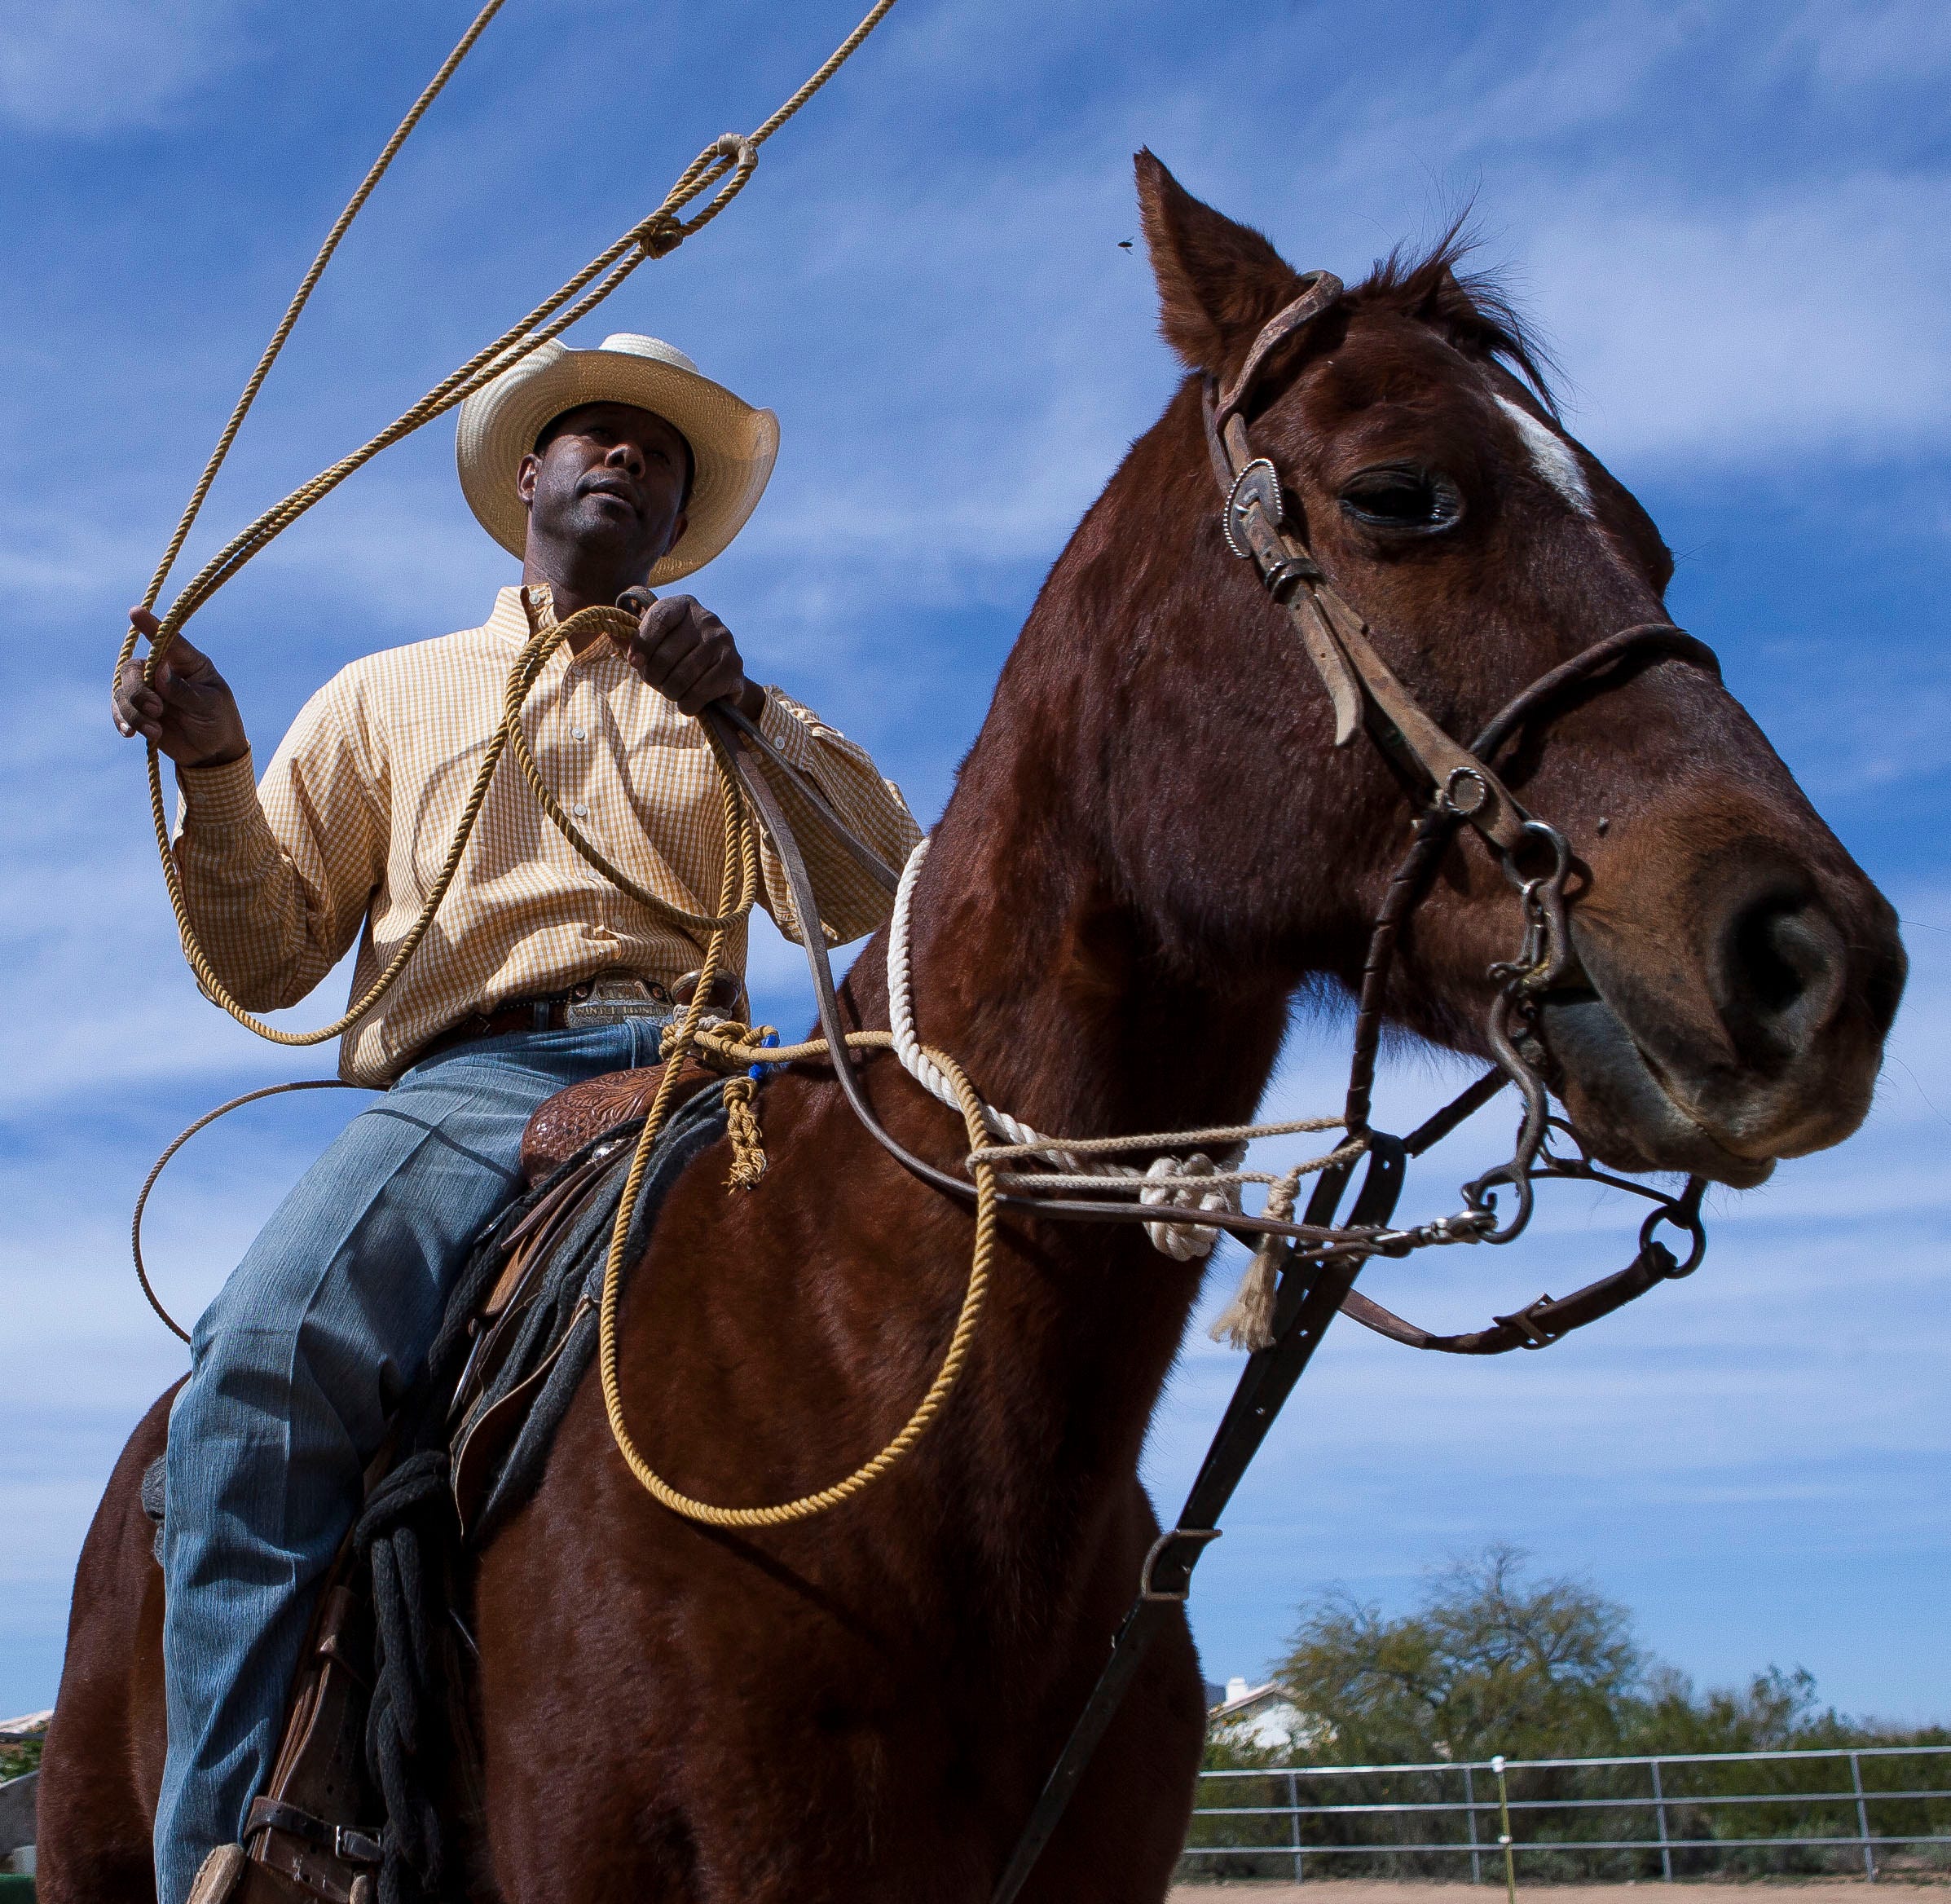 Arizona Black Rodeo honors a long tradition